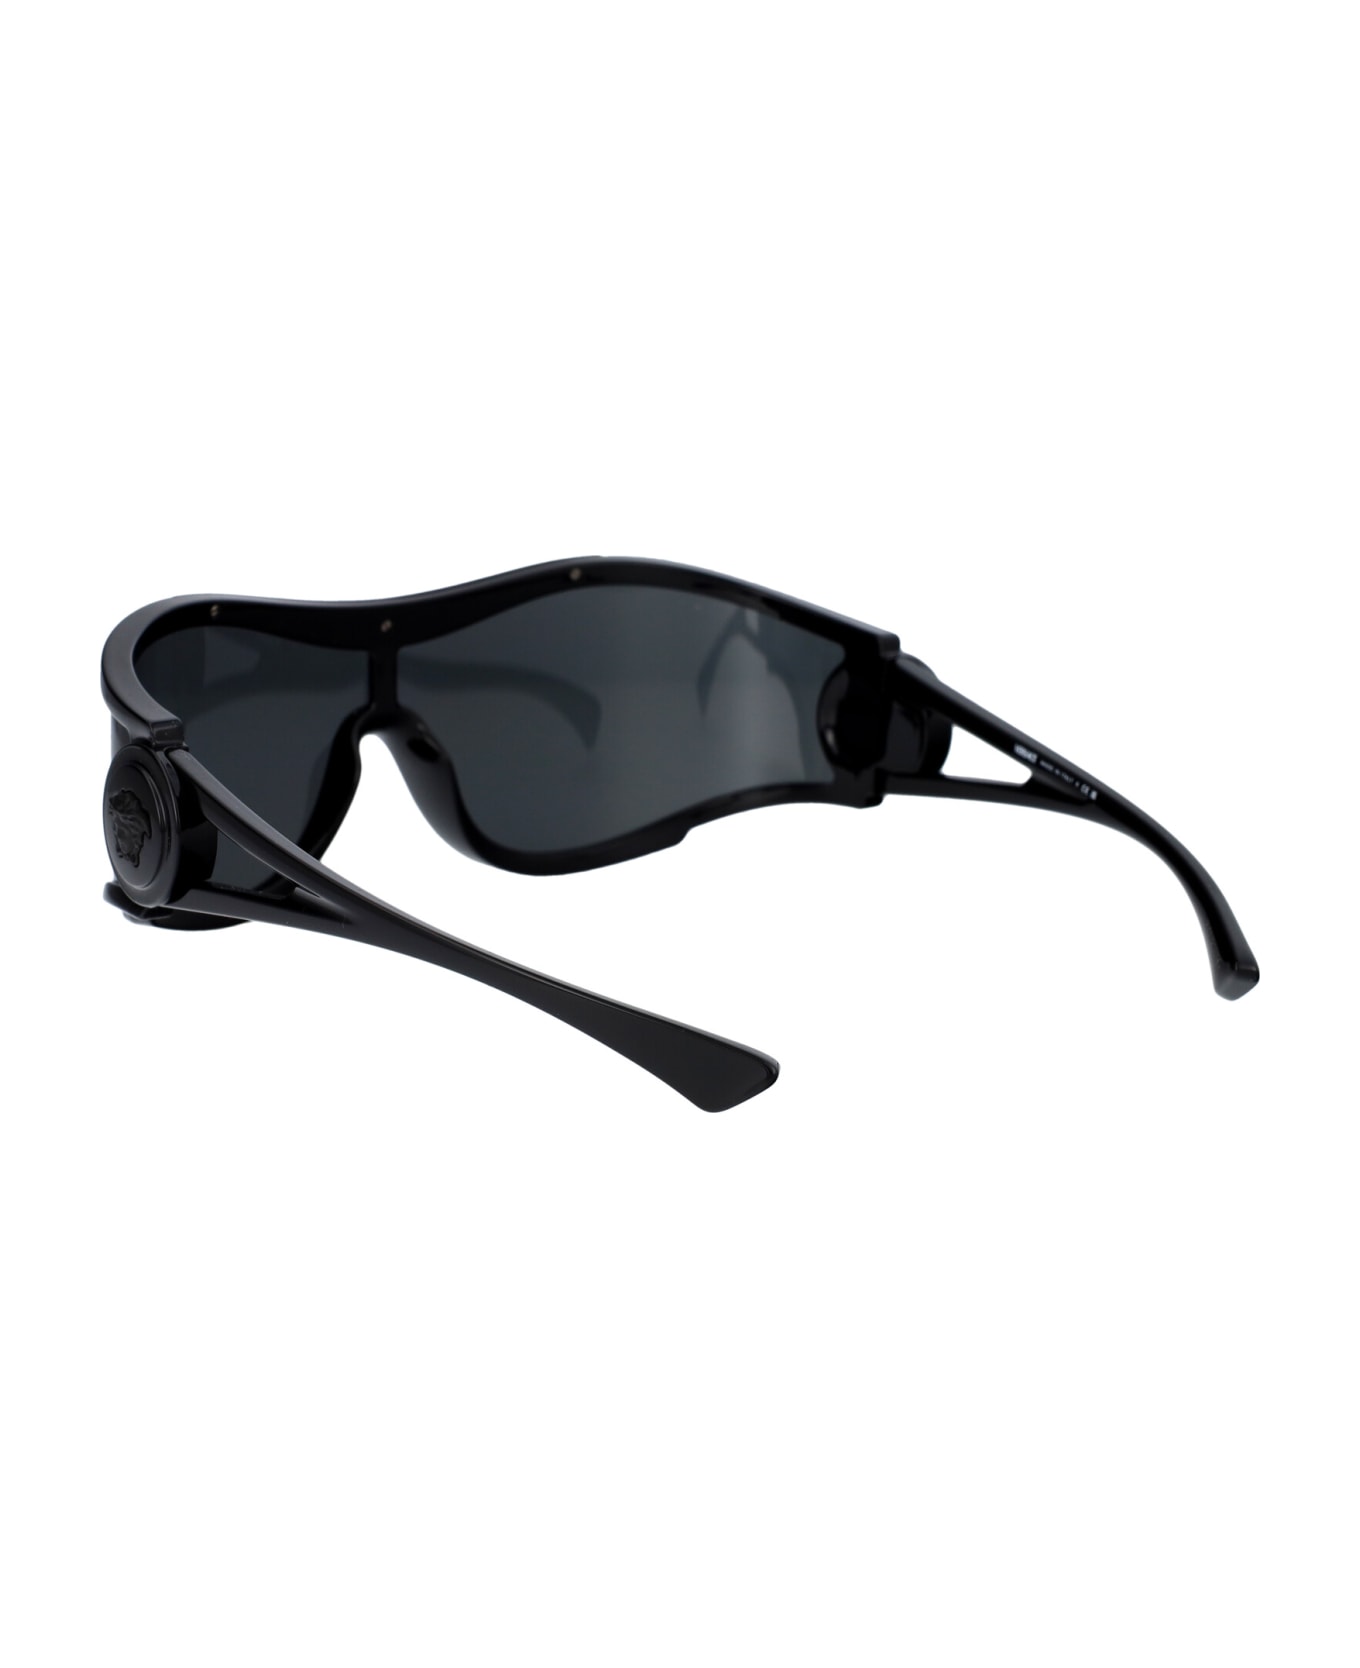 Versace Eyewear 0ve4475 Sunglasses - 536087 BLACK